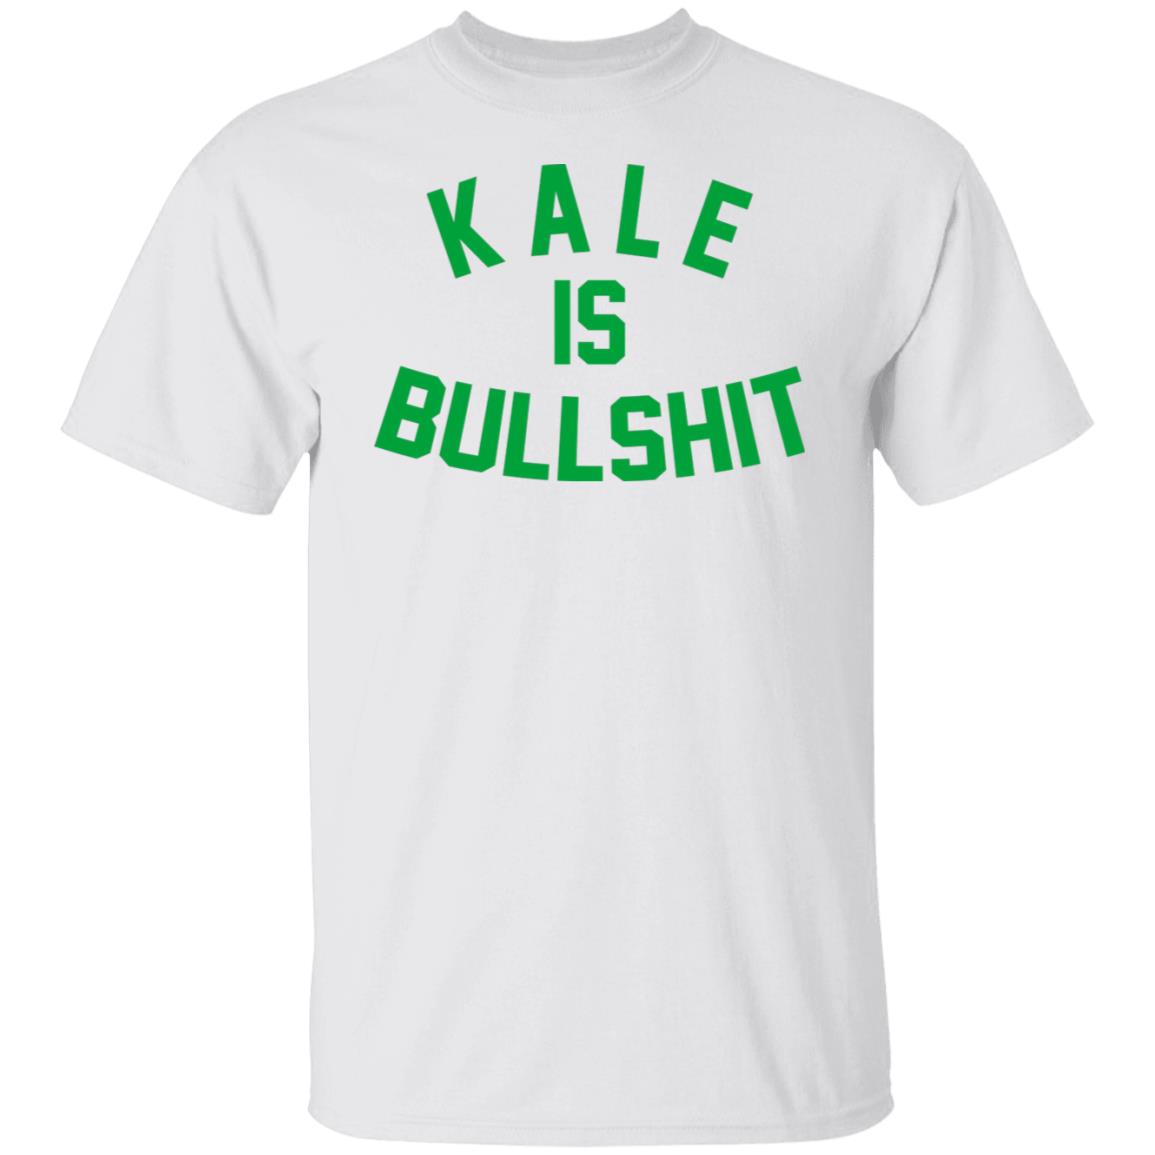 Kale is bullshit shirt